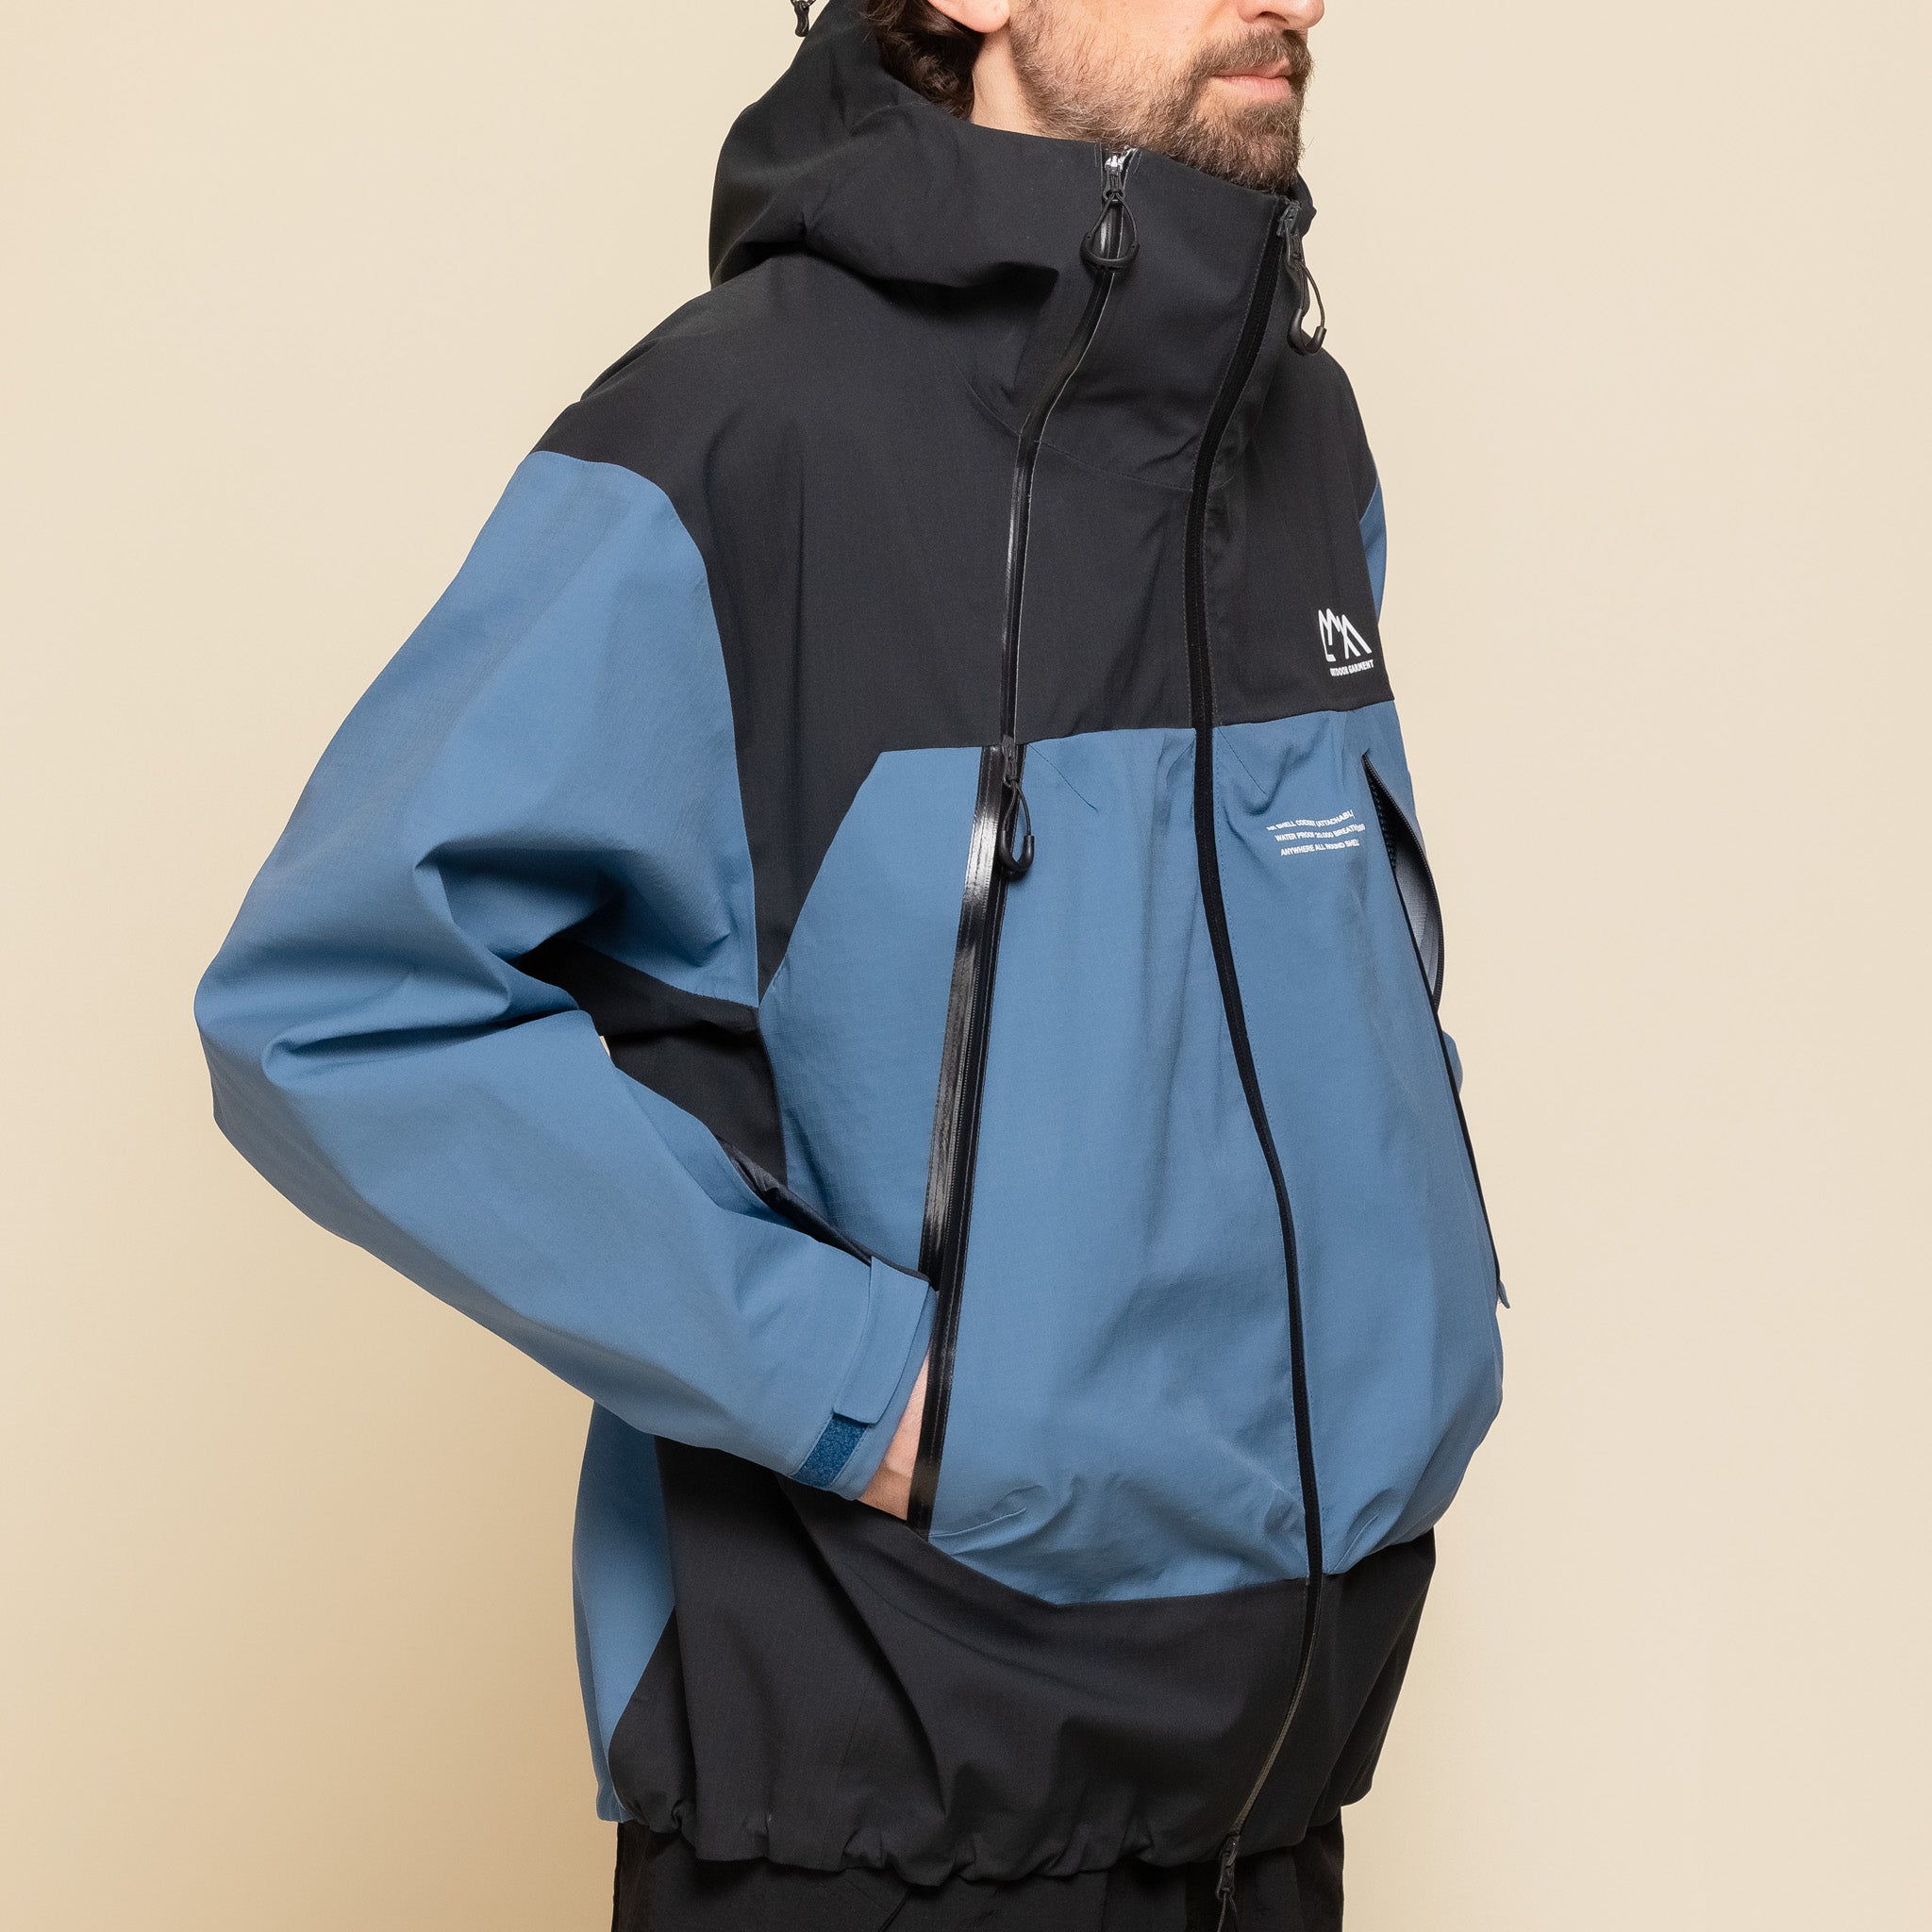 CMF Comfy Outdoor Garment - AR Shell Coexist Jacket - Blue